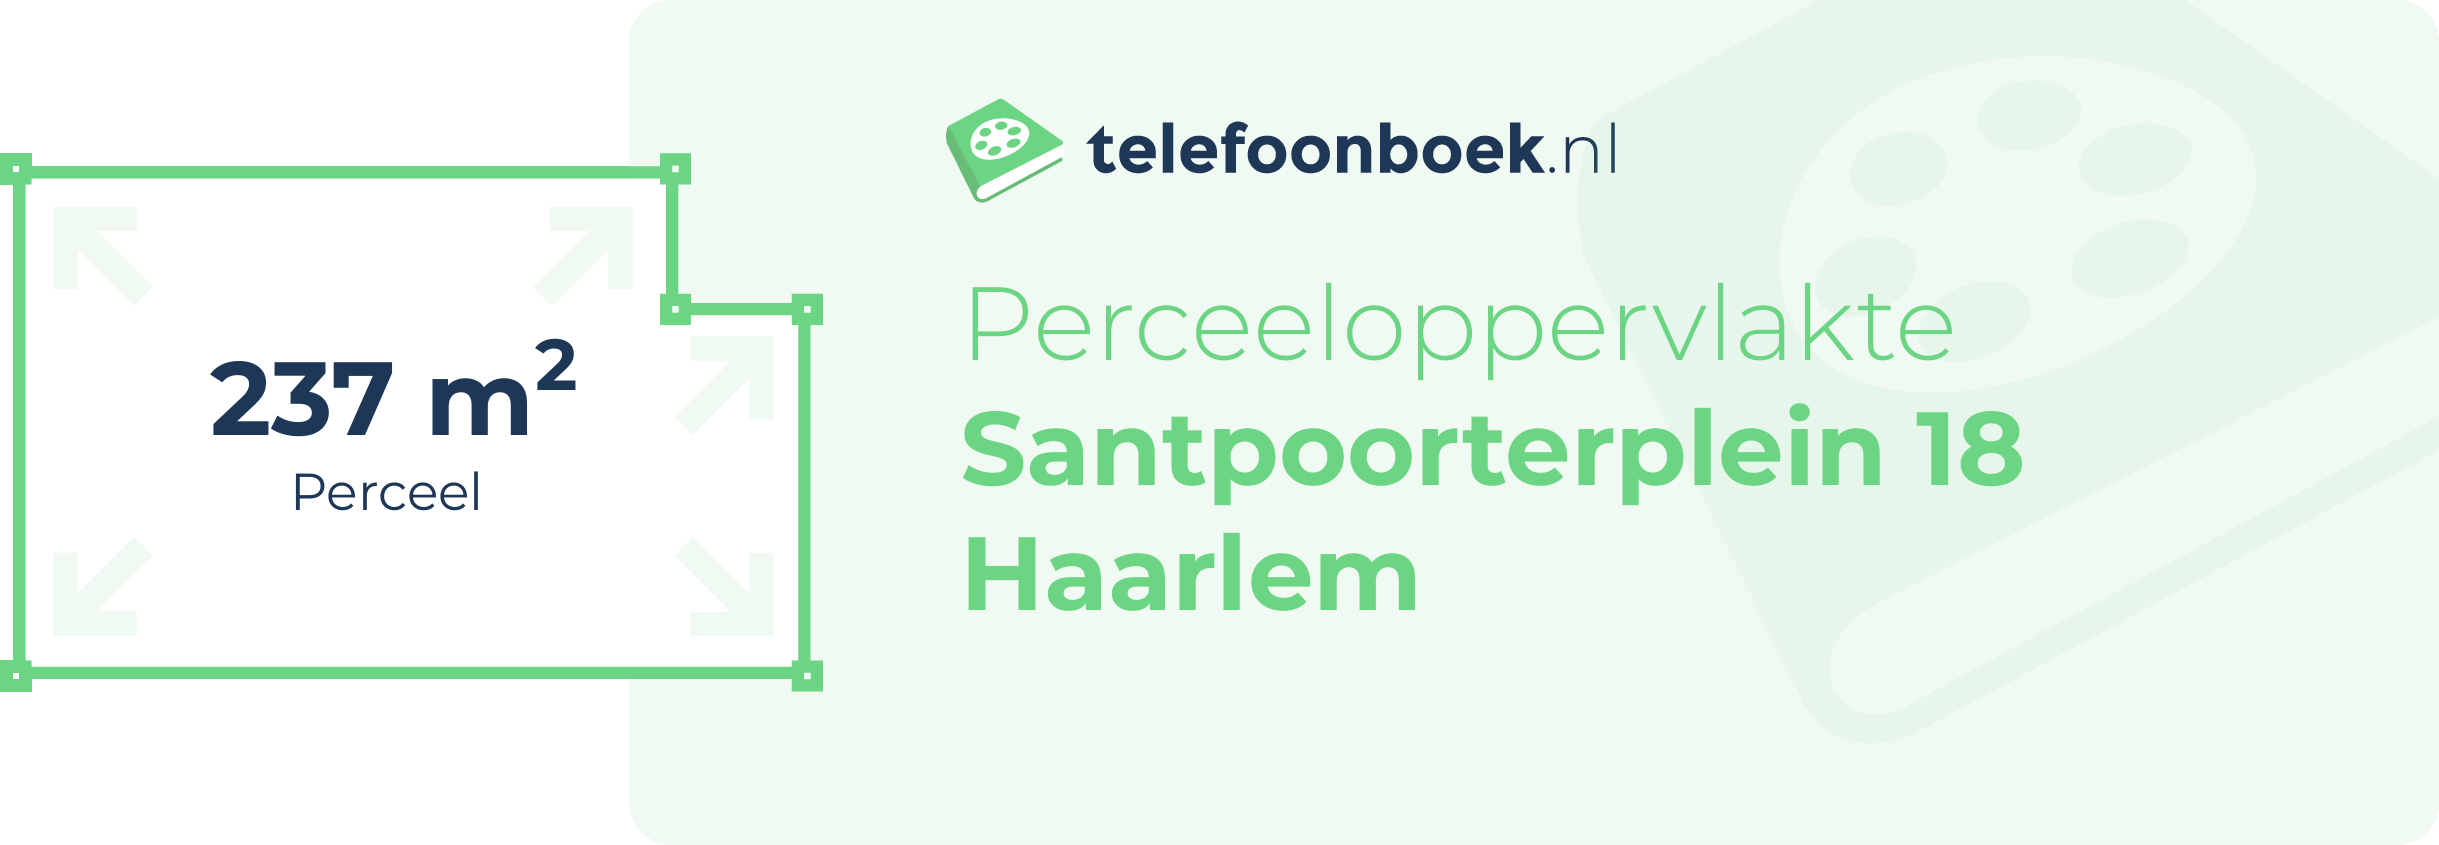 Perceeloppervlakte Santpoorterplein 18 Haarlem